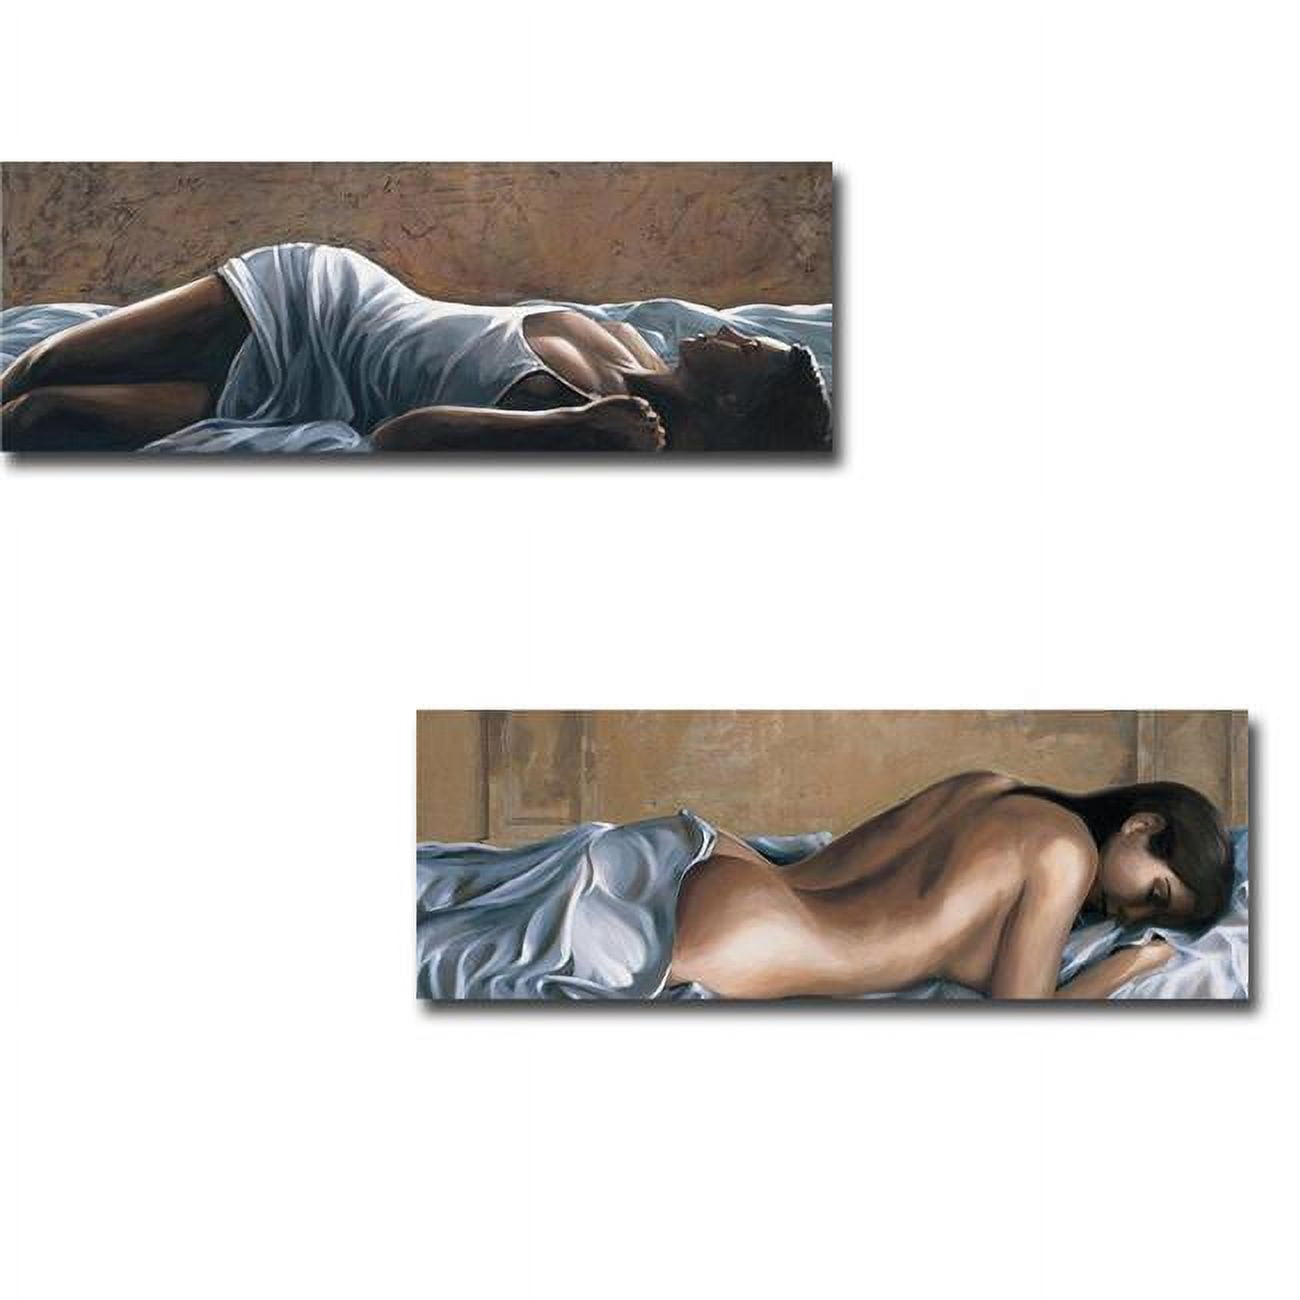 16484586tg Sognando & Tenerezza By Giorgio Mariani 2-piece Premium Oversize Gallery-wrapped Canvas Giclee Art Set - 16 X 48 In.